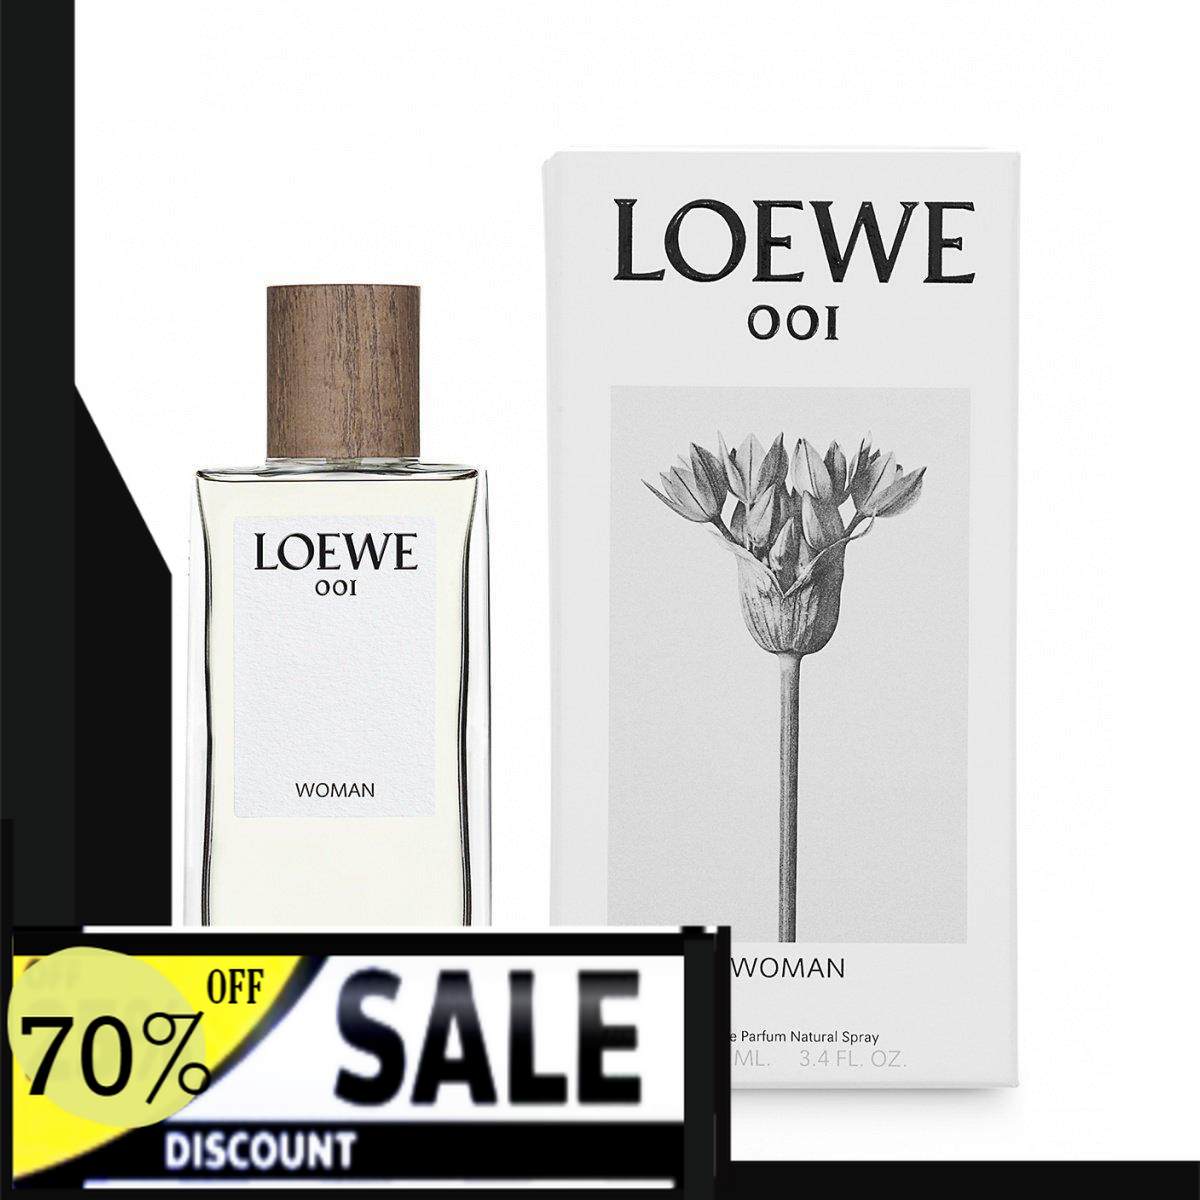 Brand Loewe ราคาถูก ซื้อออนไลน์ที่ - ก.ค. 2022 | Lazada.co.th